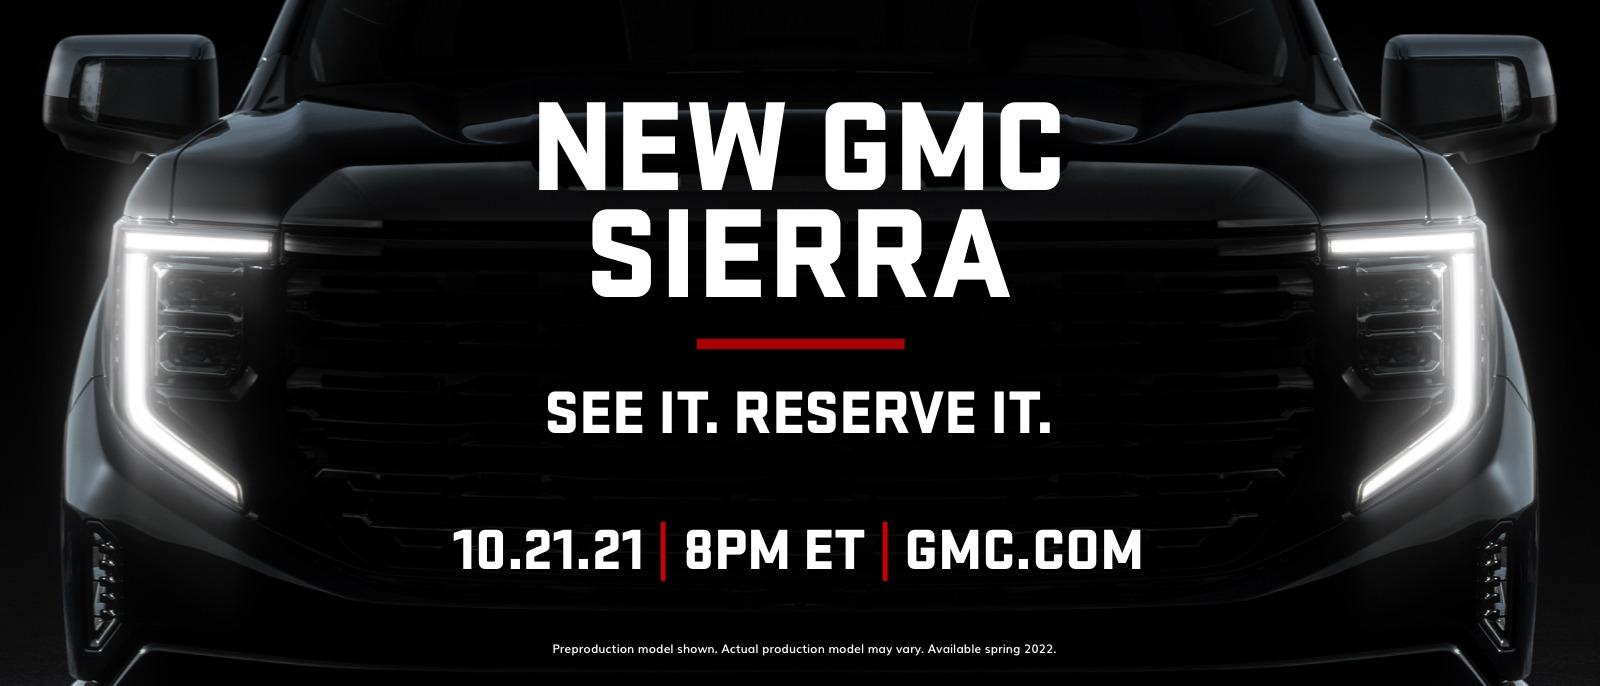 New GMC Sierra. See it. Reserve it. 10.21.21 8pm Eastern Time GMC.COM